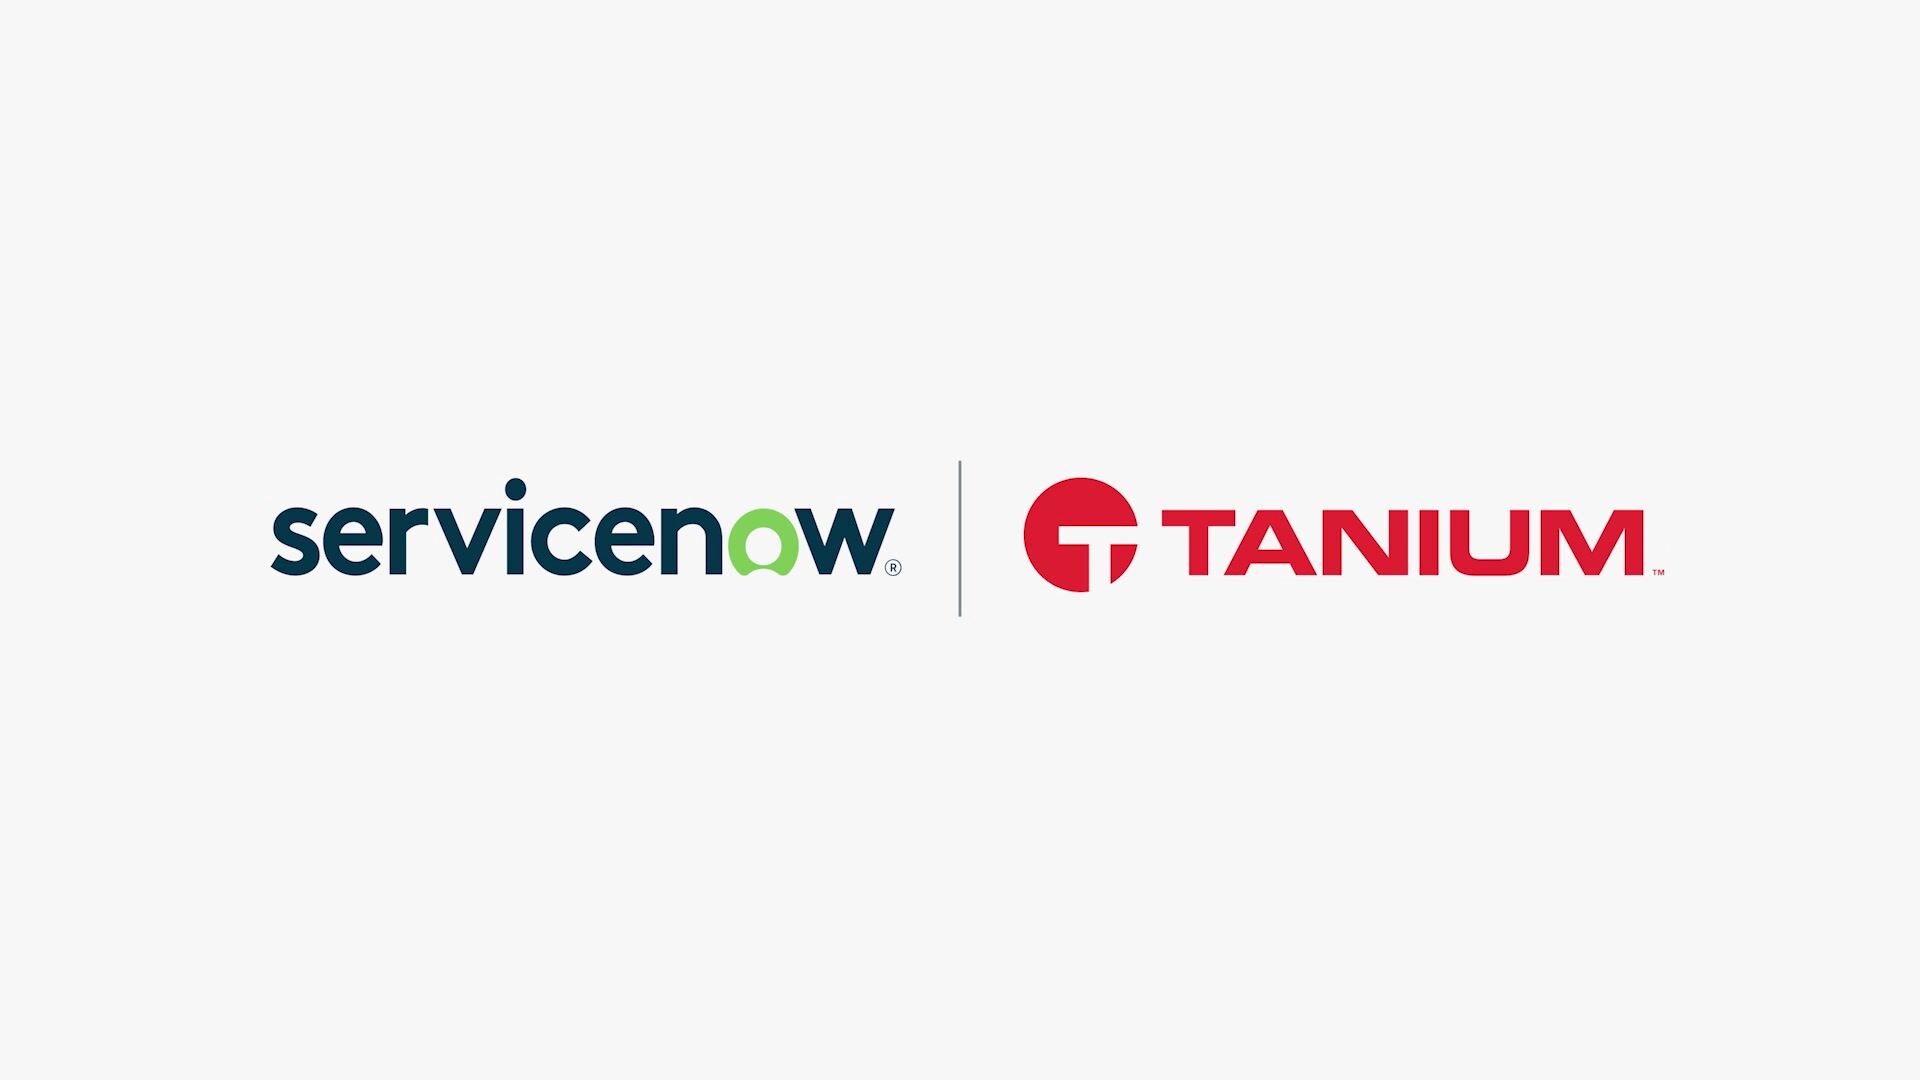 Tanium & ServiceNow logos lockup